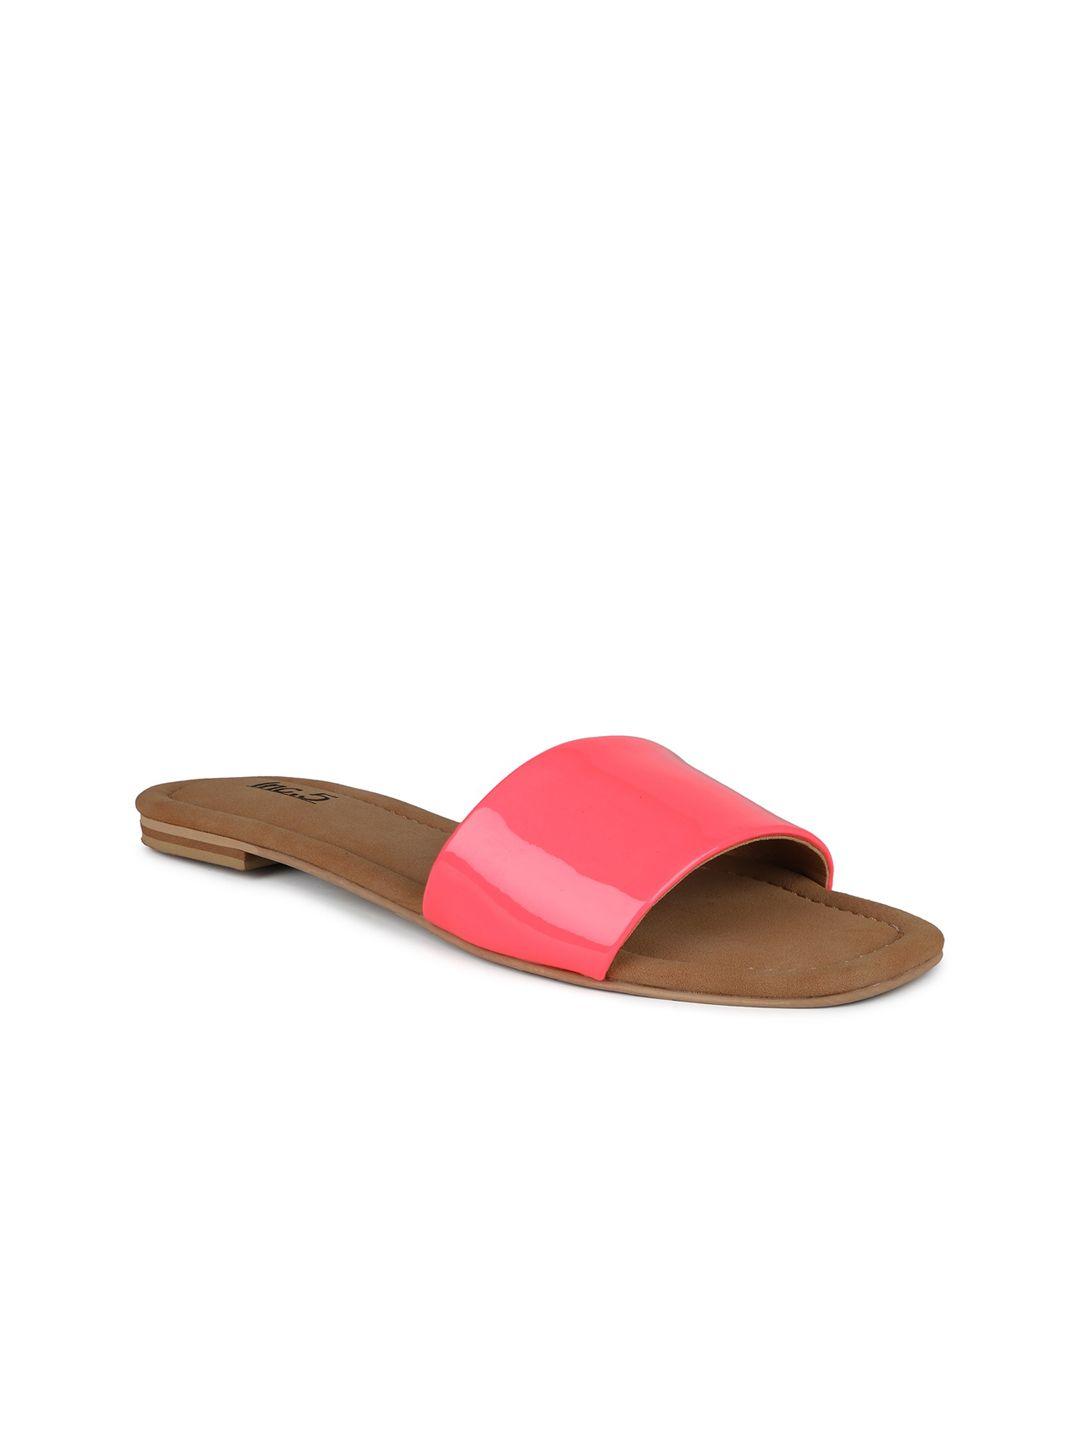 inc 5 women pink embellished open toe flats